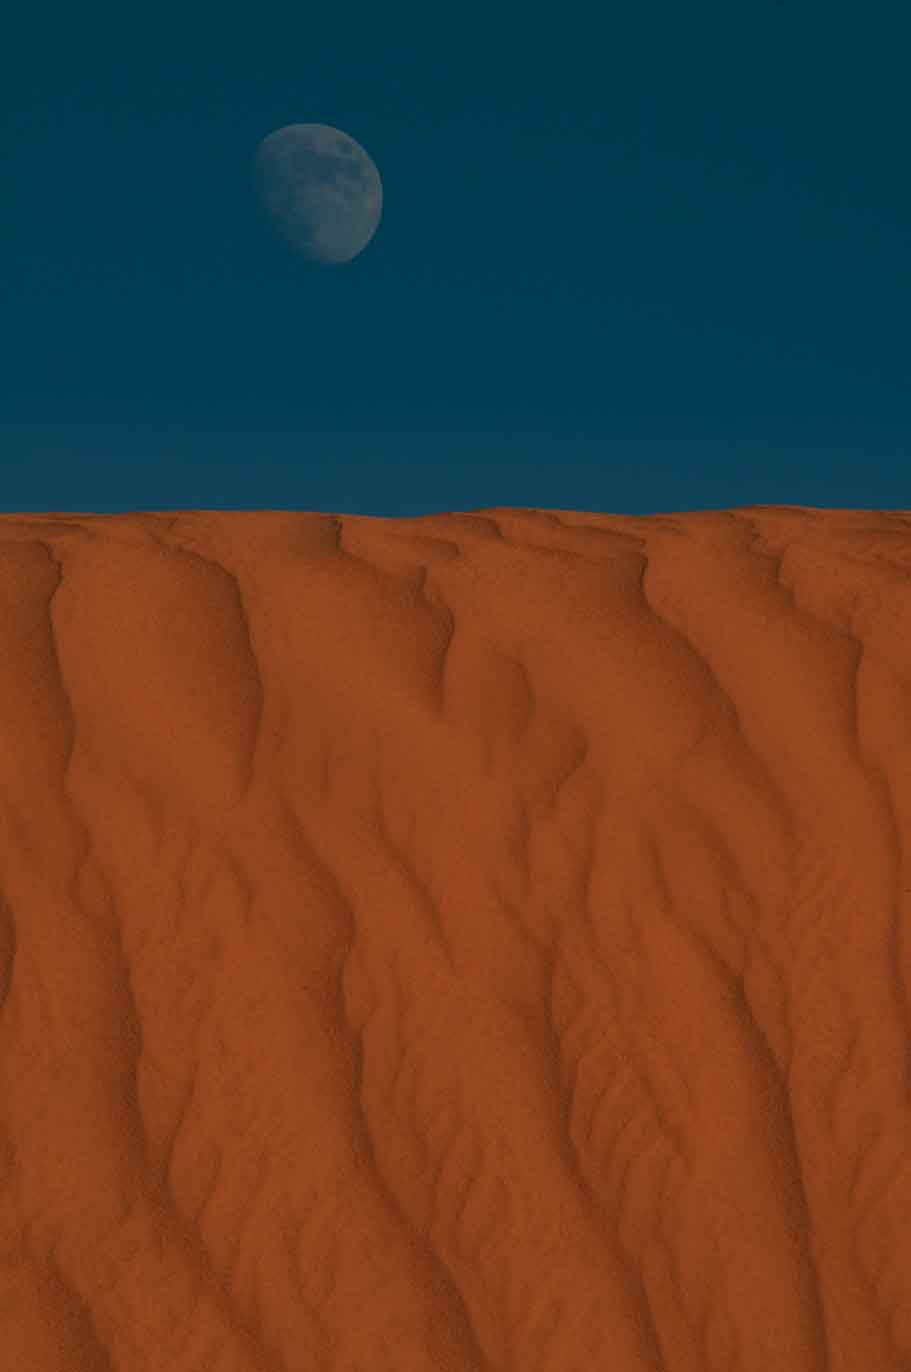 Full moon rising over a sand dune in the high desert near the Navajo community of Kaibito , Arizona